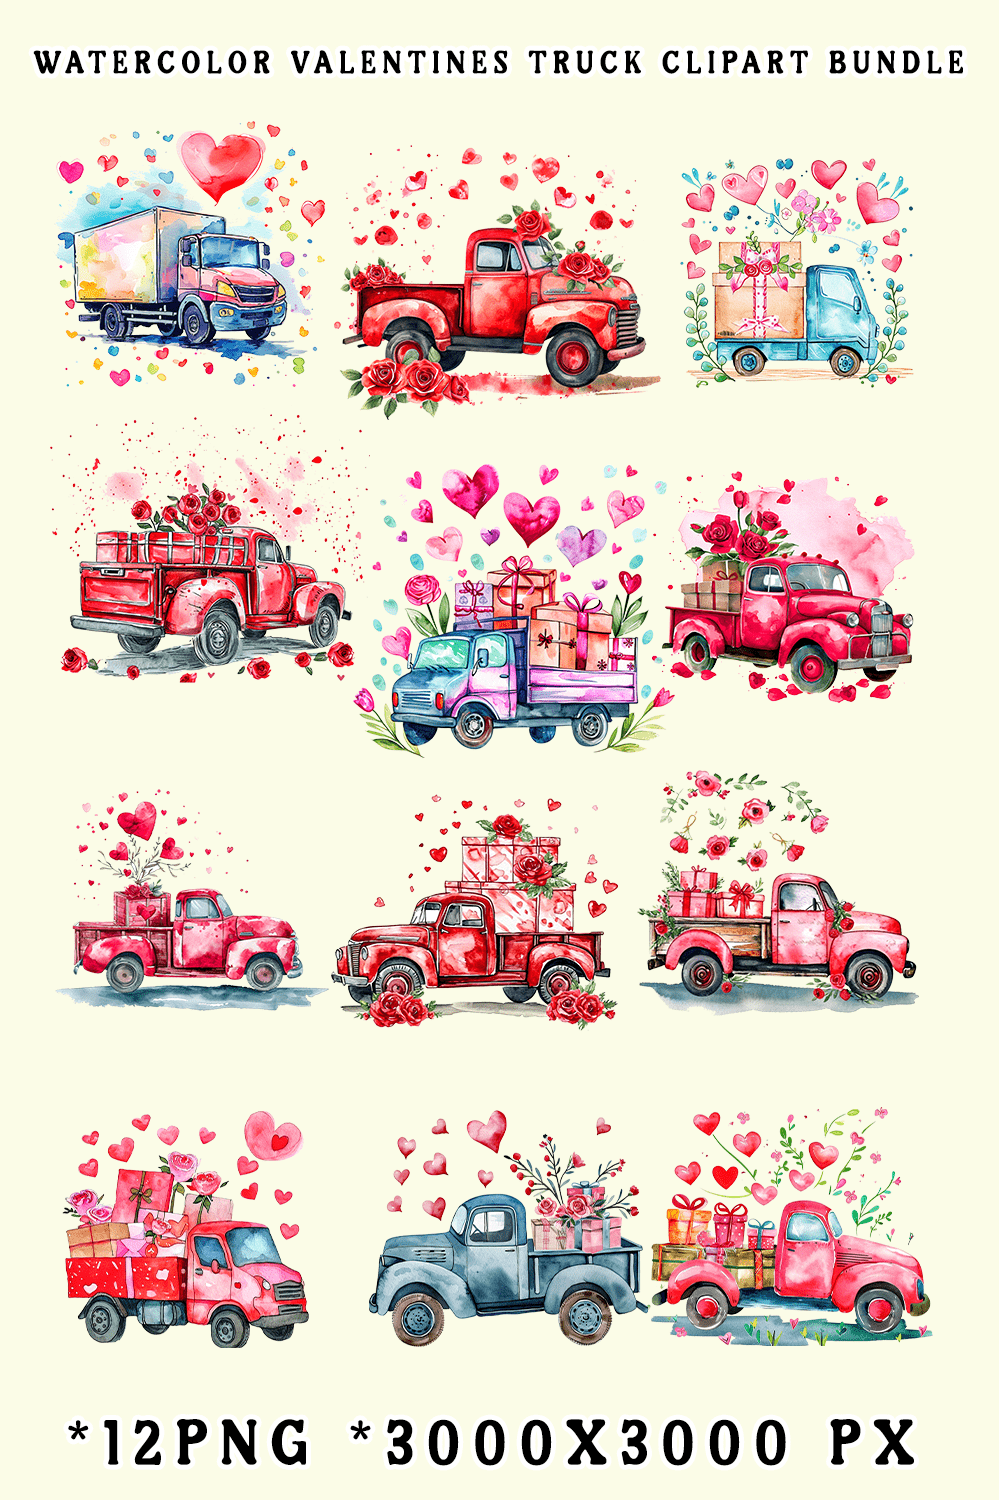 Watercolor Valentines Truck Clipart Bundle pinterest preview image.